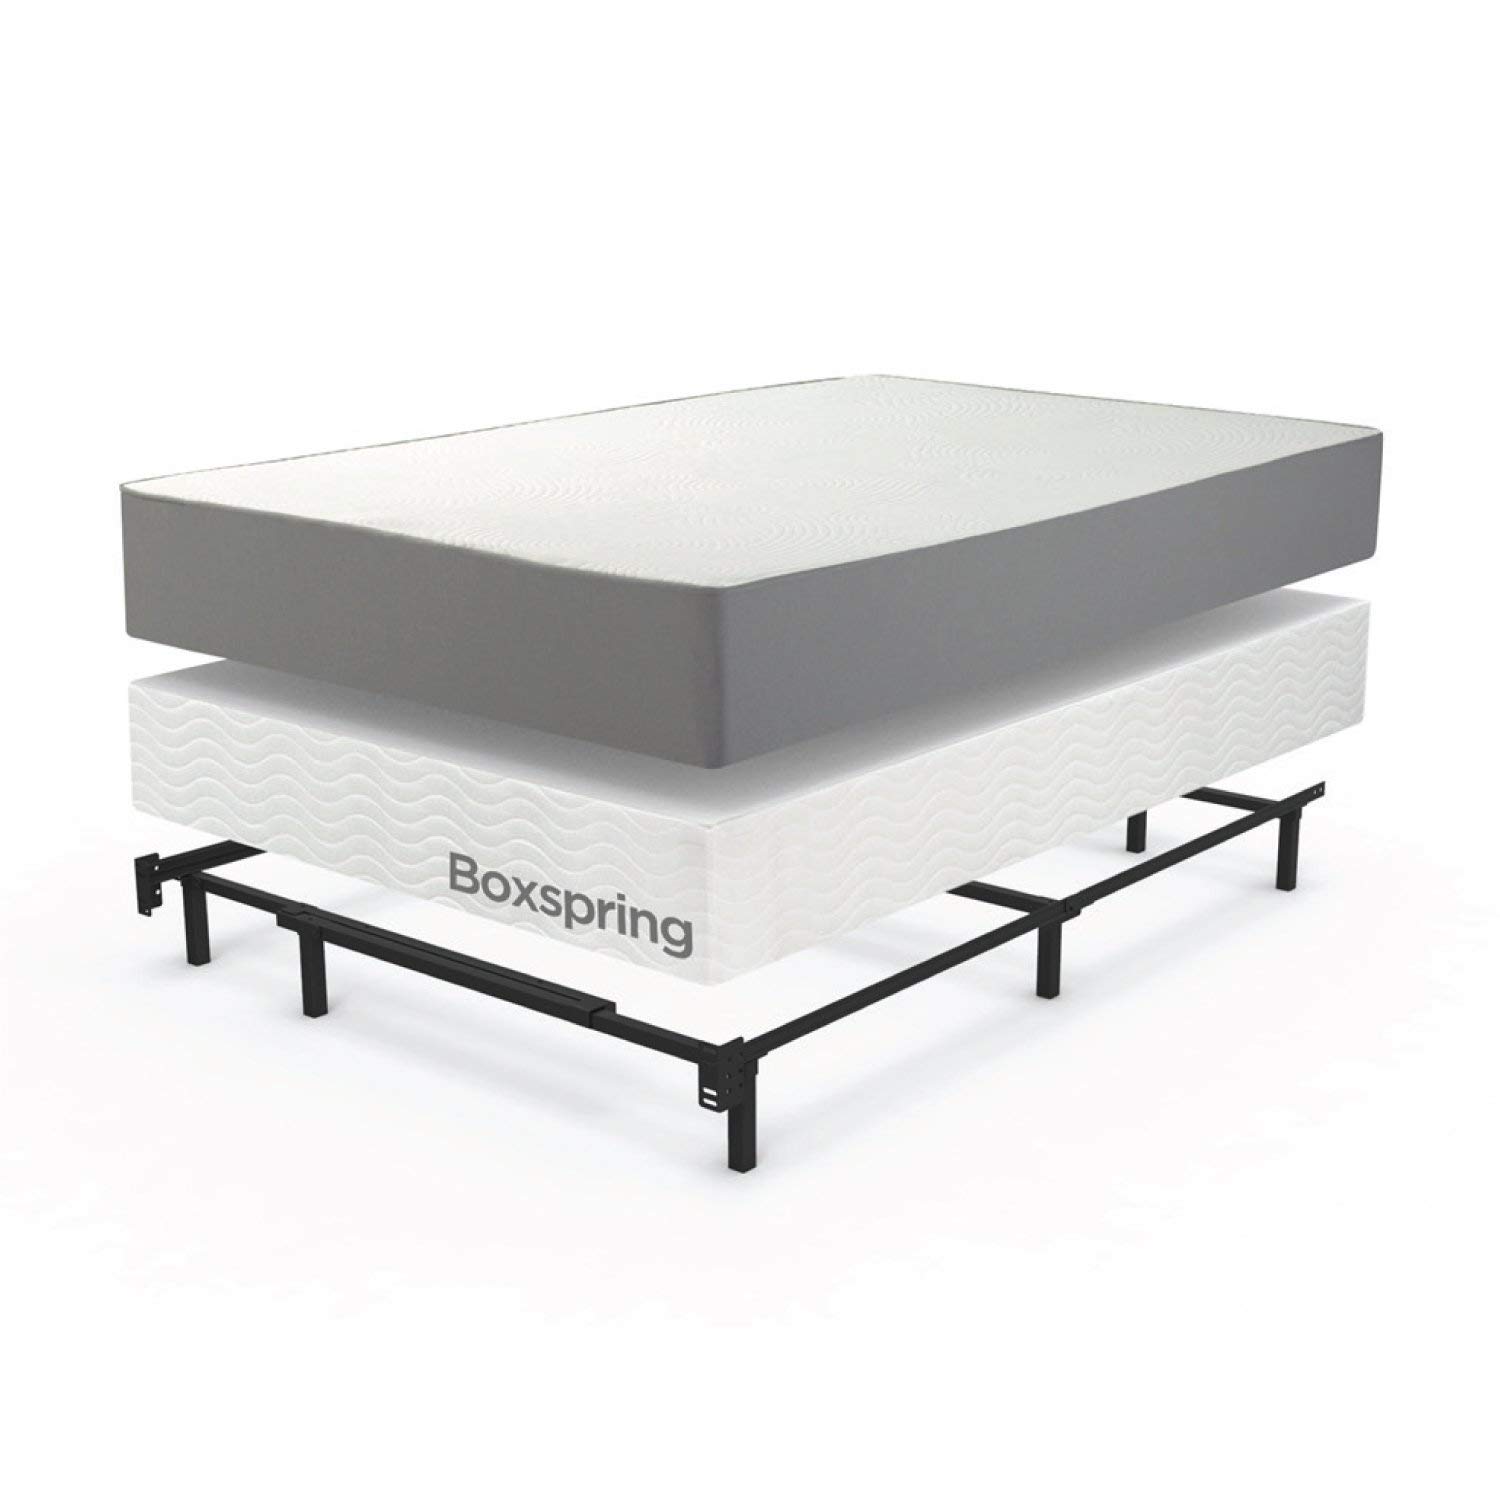 Box Spring bed amazon.com: zinus compack adjustable steel bed frame, for box spring u0026  mattress set, XXLQRLB